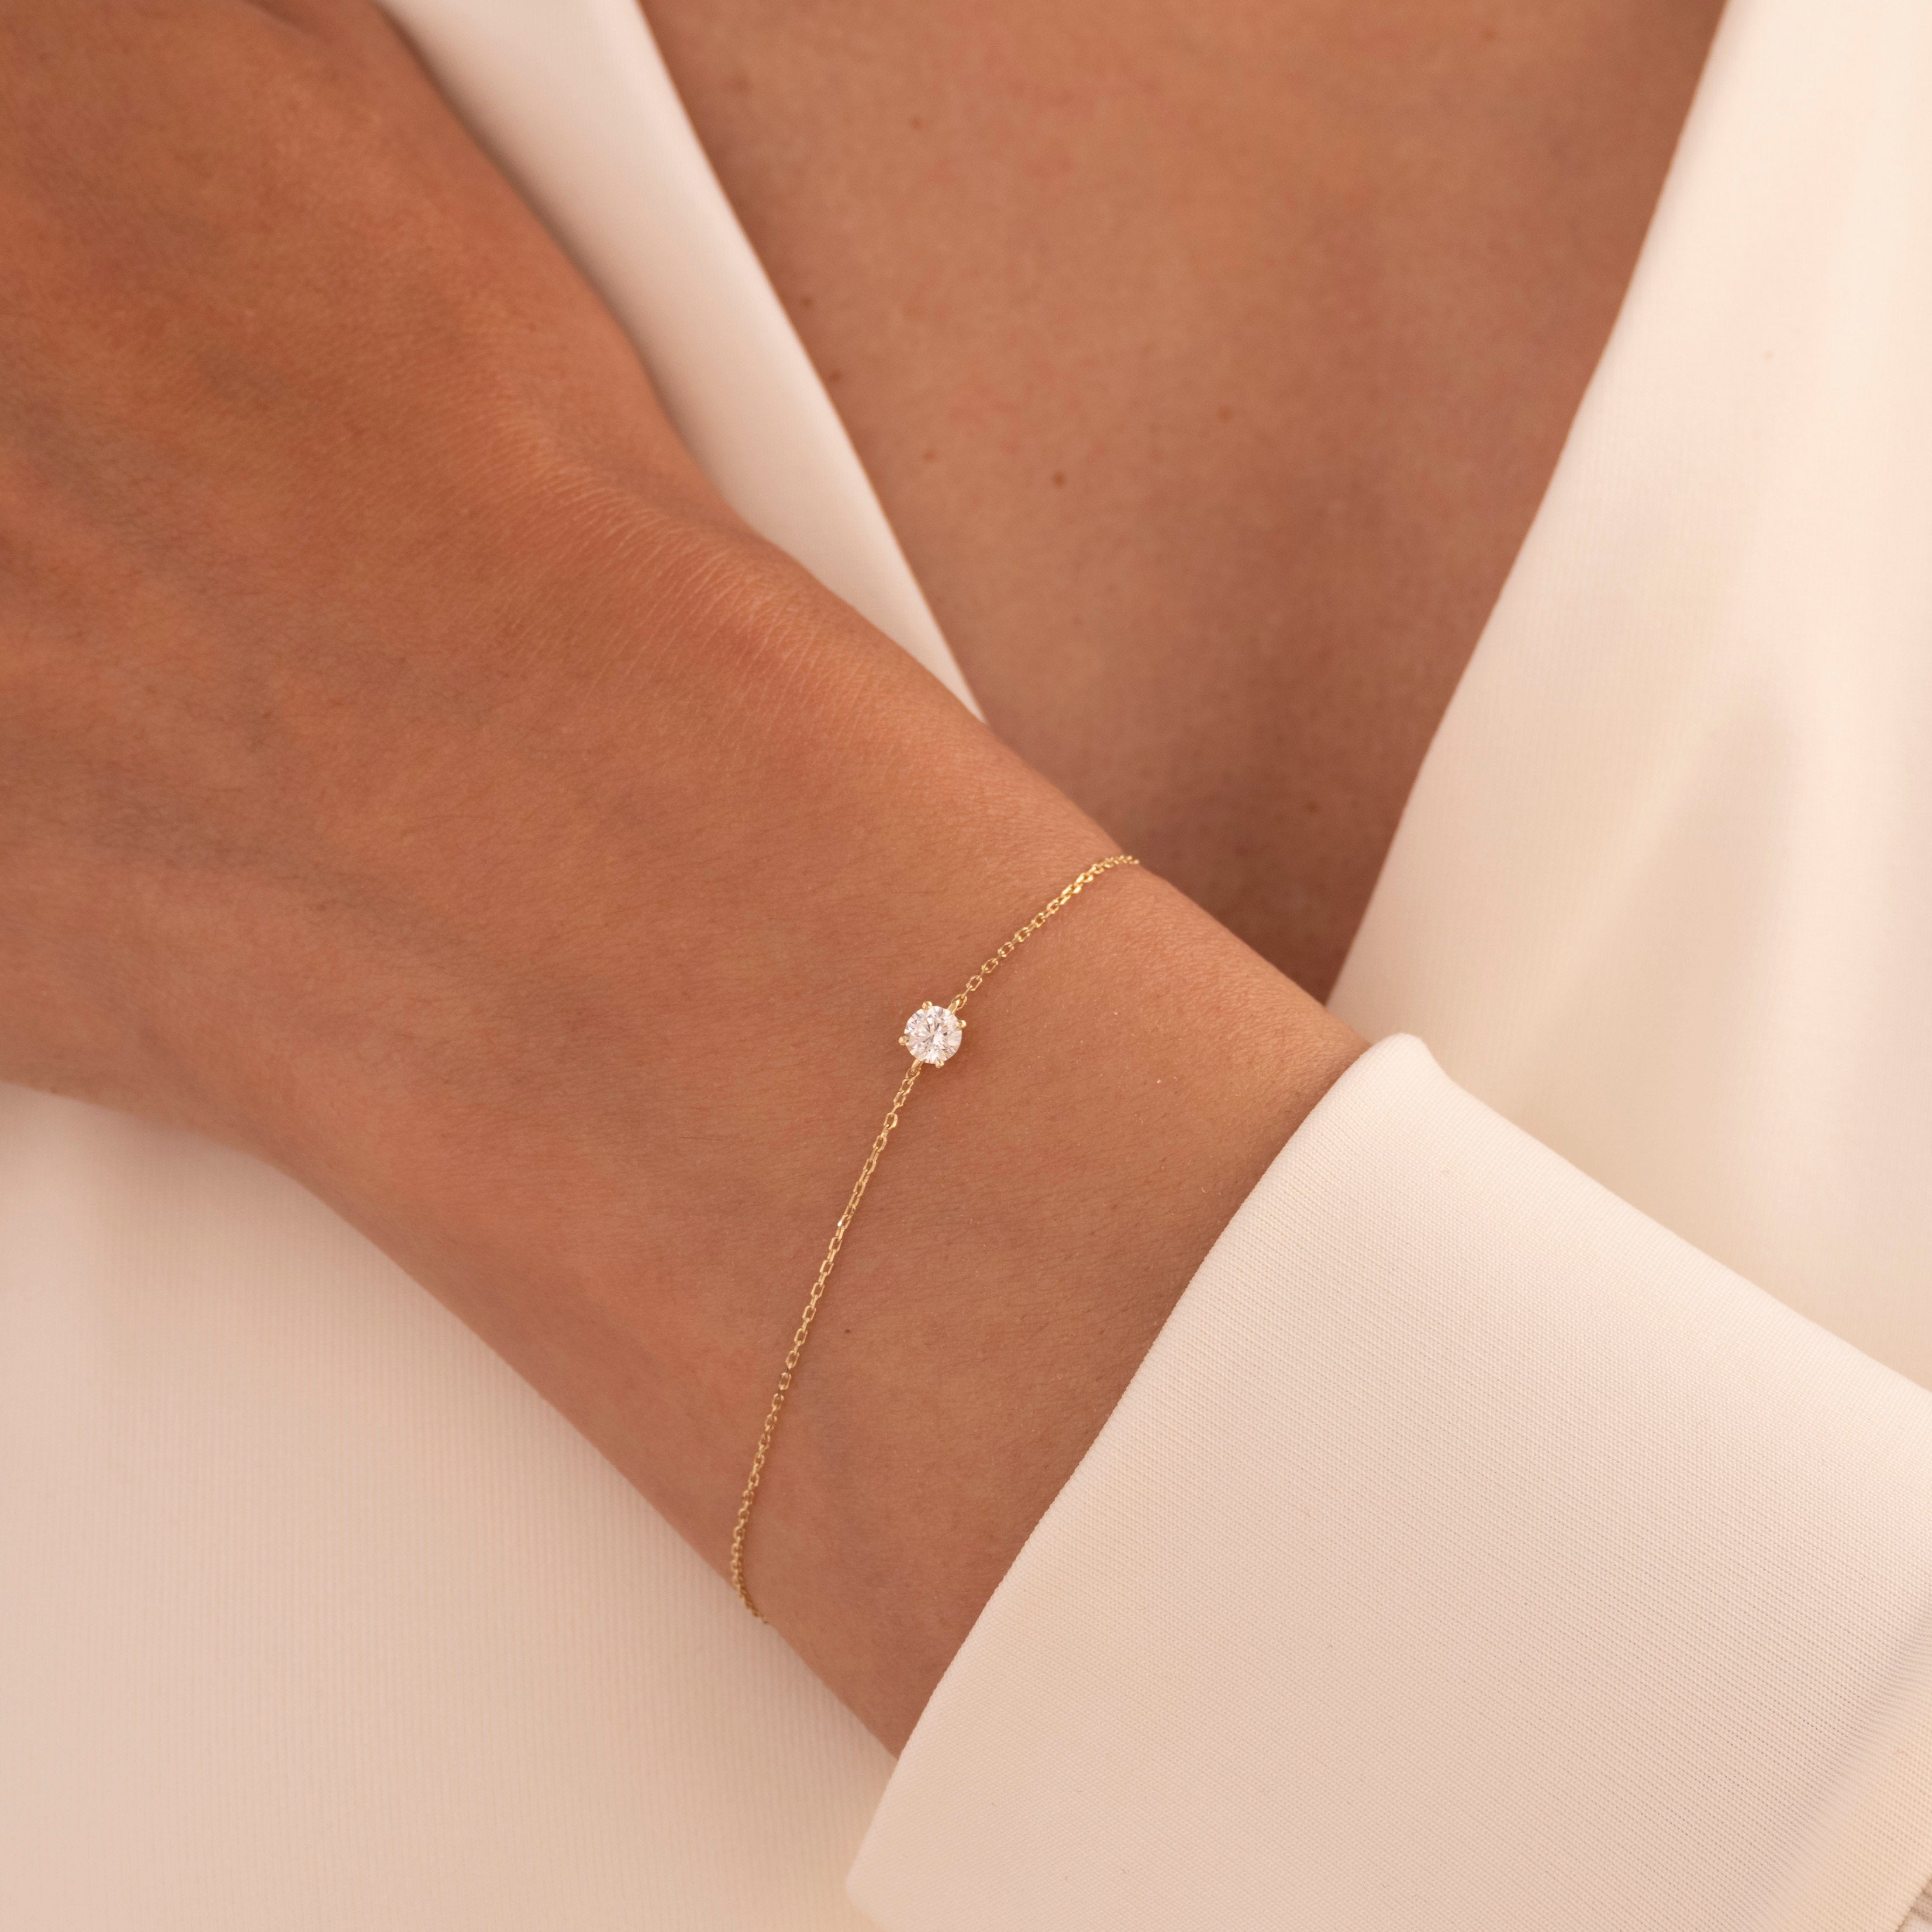 Gisser Jewels Gold Bracelet with Zirconia Stone